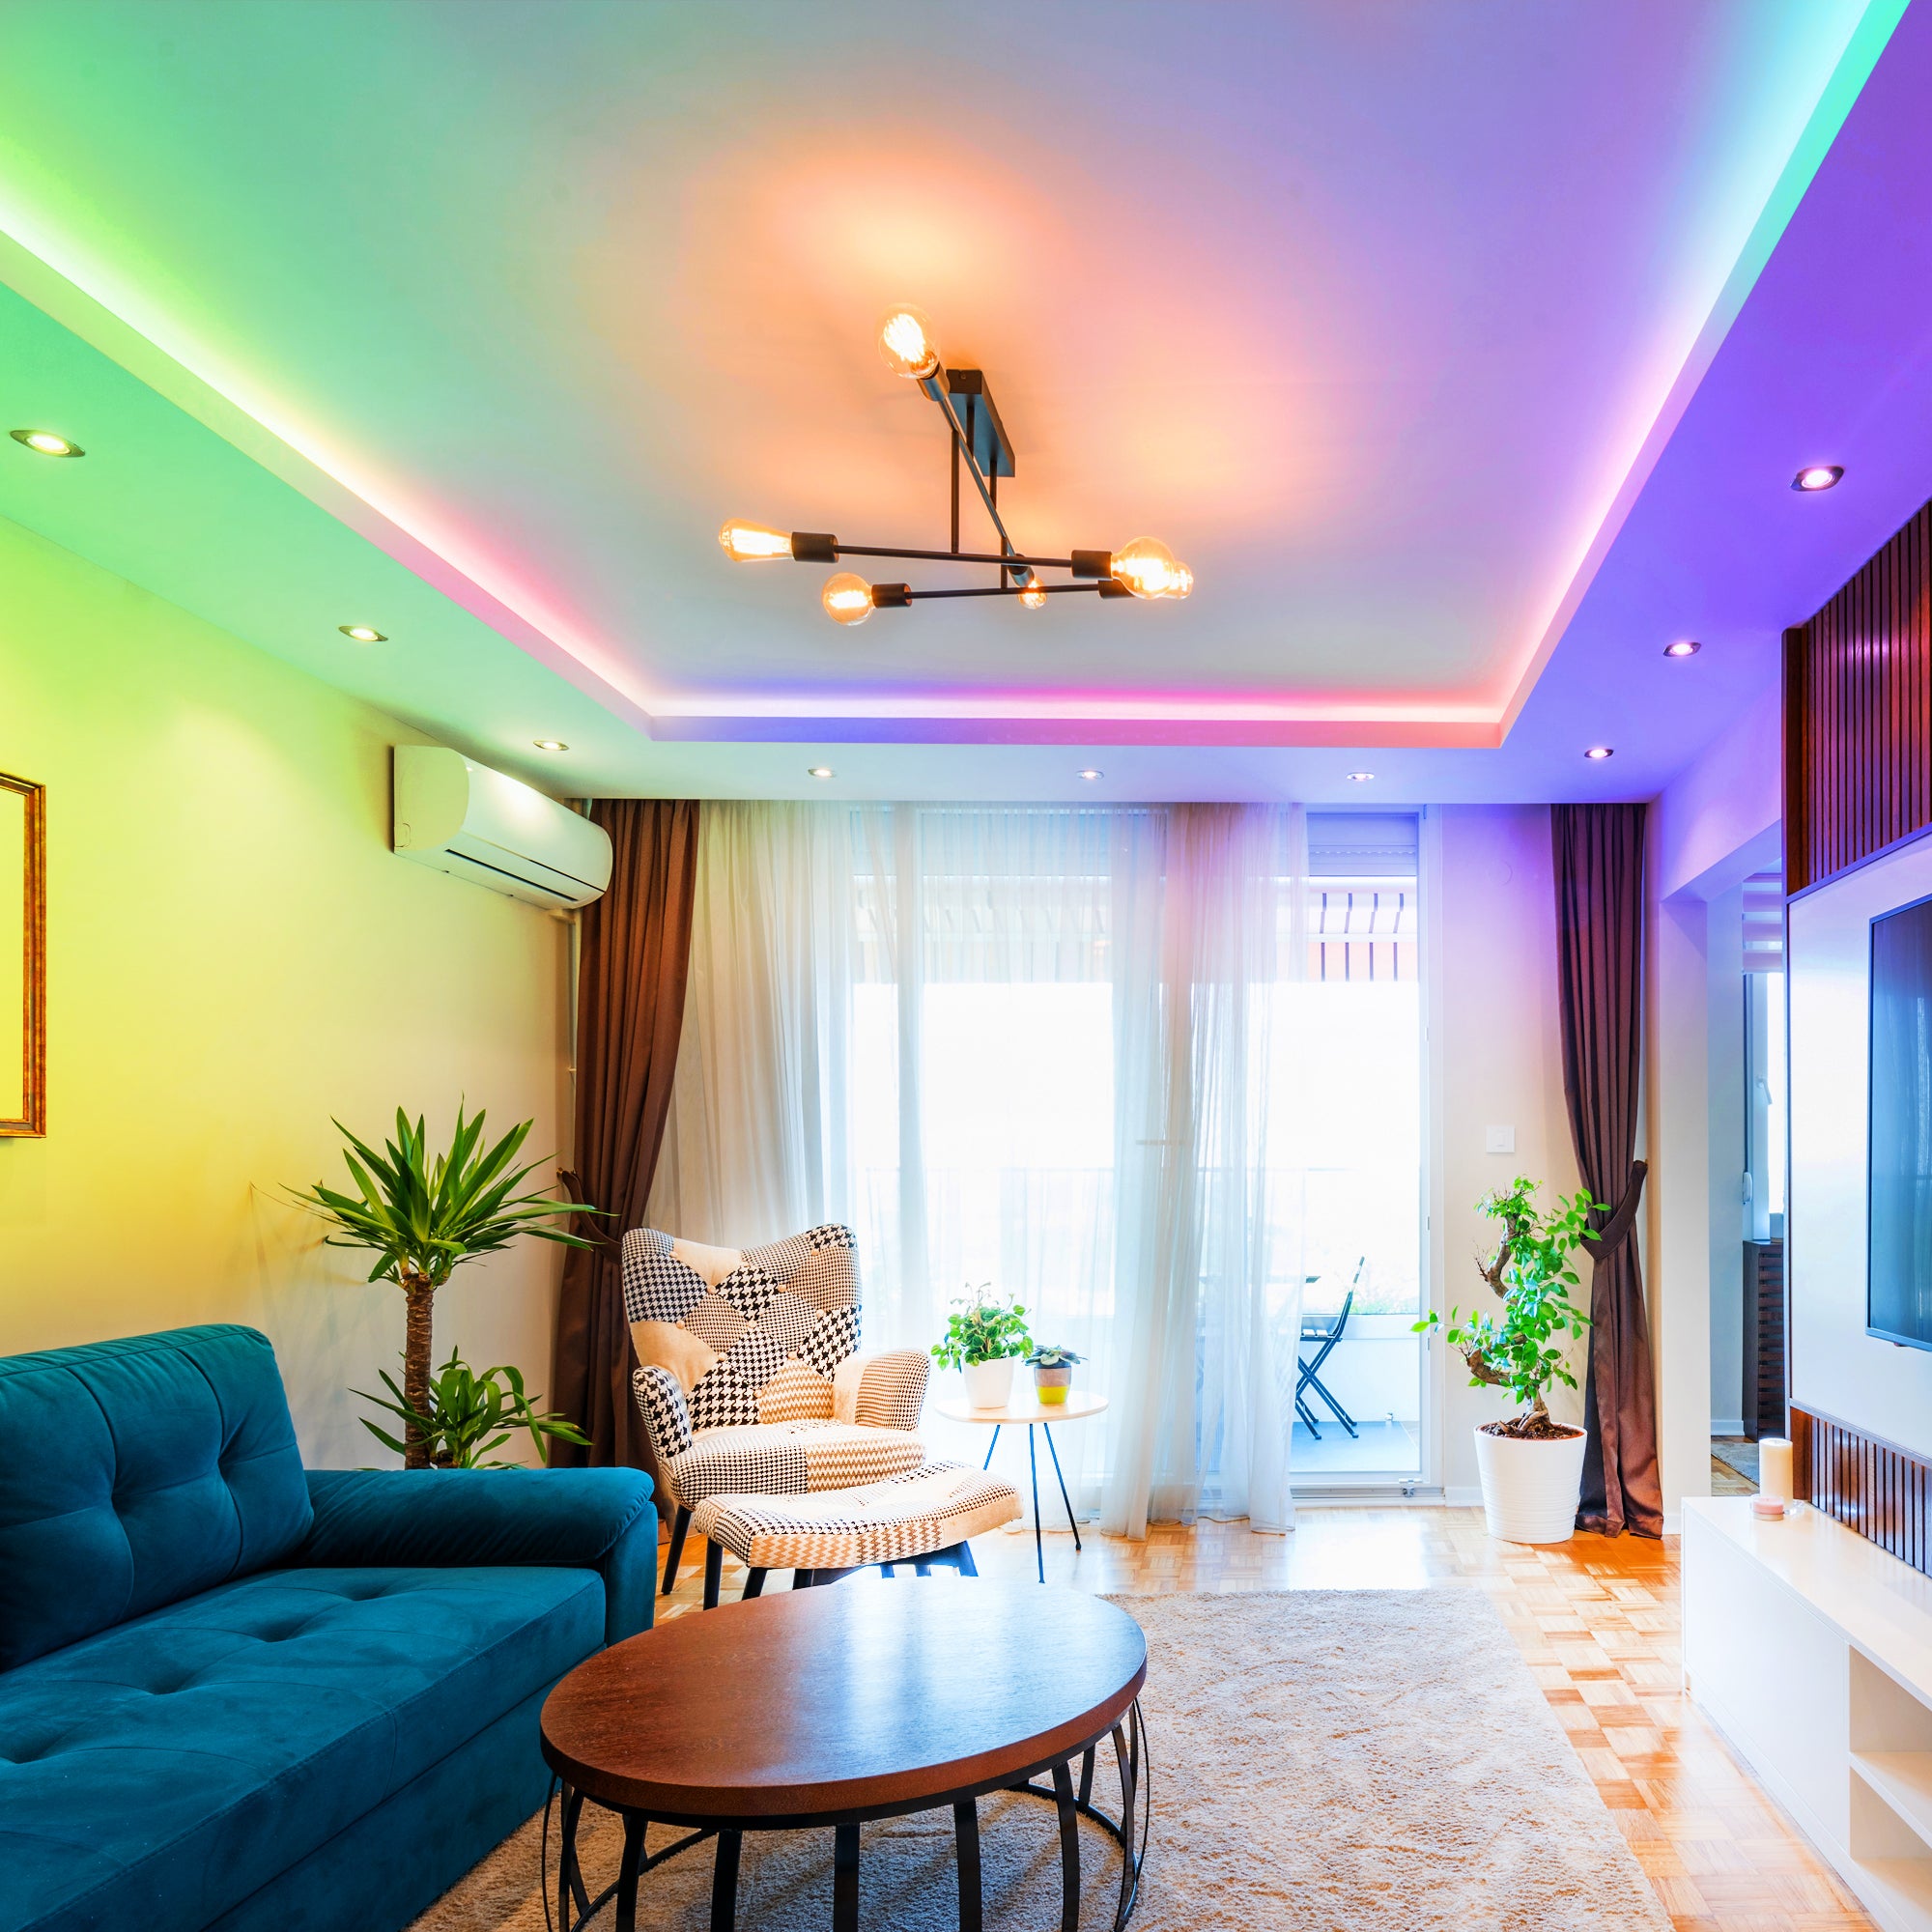 Merkury Innovations Smart Indoor and Outdoor Flex LED Multicolor